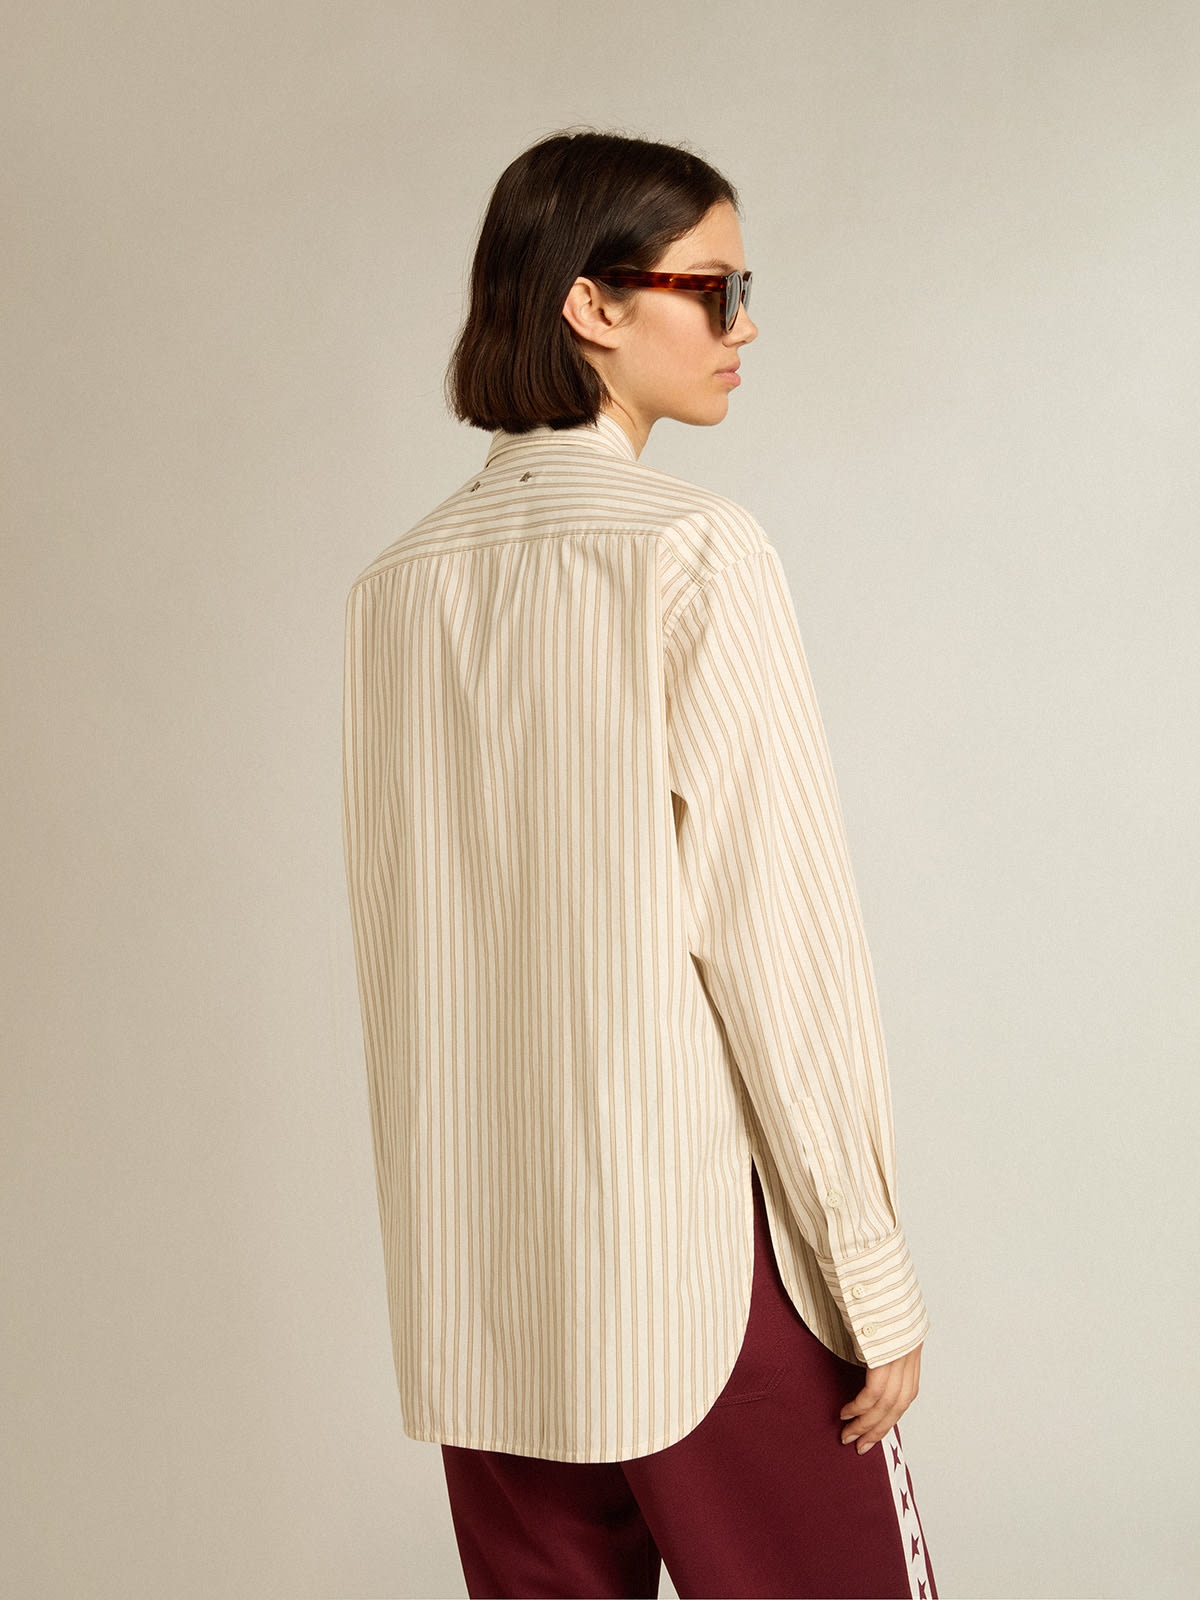 Women’s white cotton shirt with beige stripes - 4